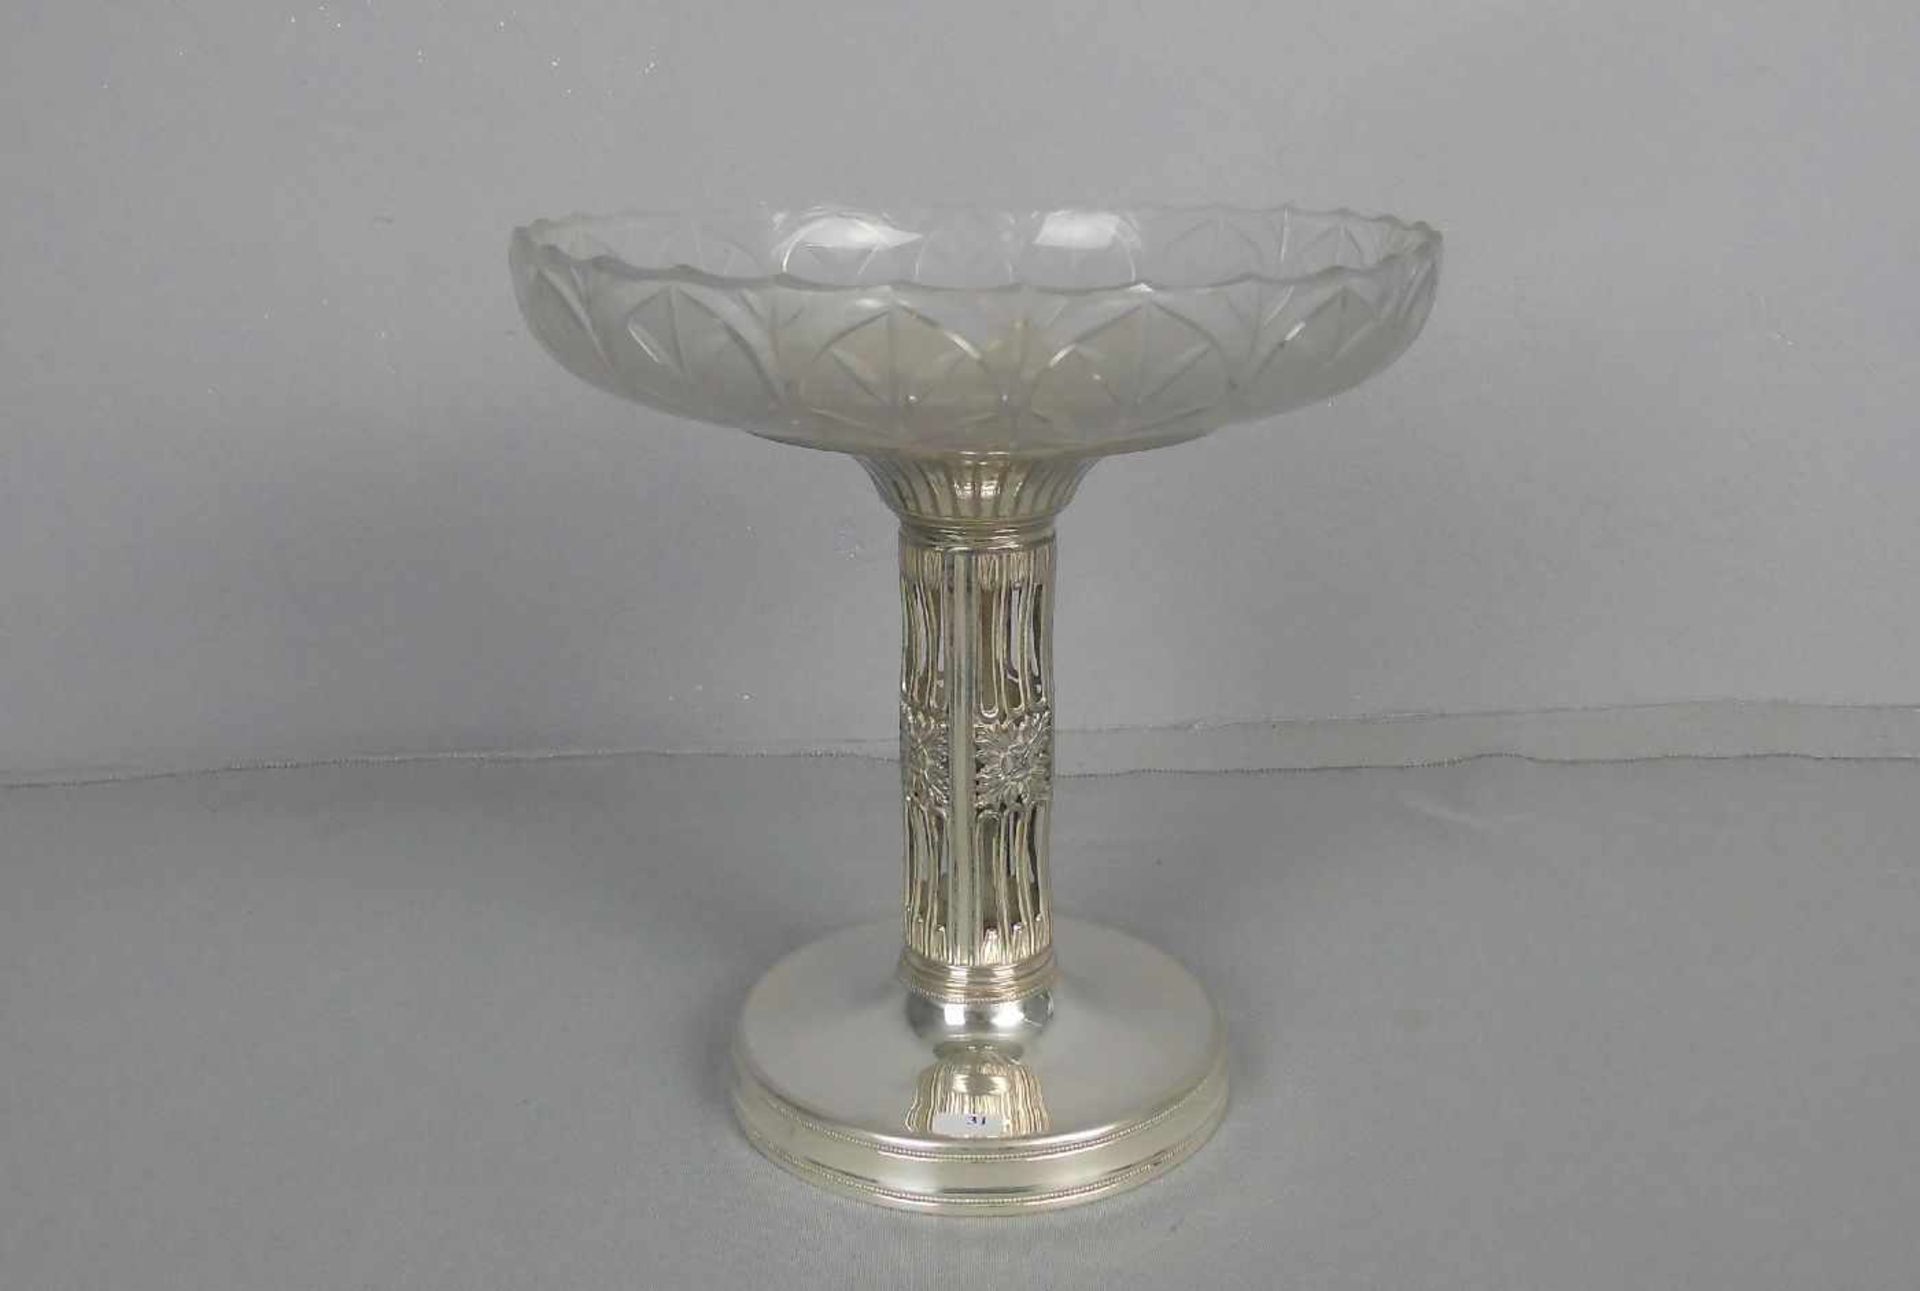 JUGENDSTIL - FUSSSCHALE / TAFELAUFSATZ / bowl on a stand / Art nouveau centerpiece, zweiteilig,